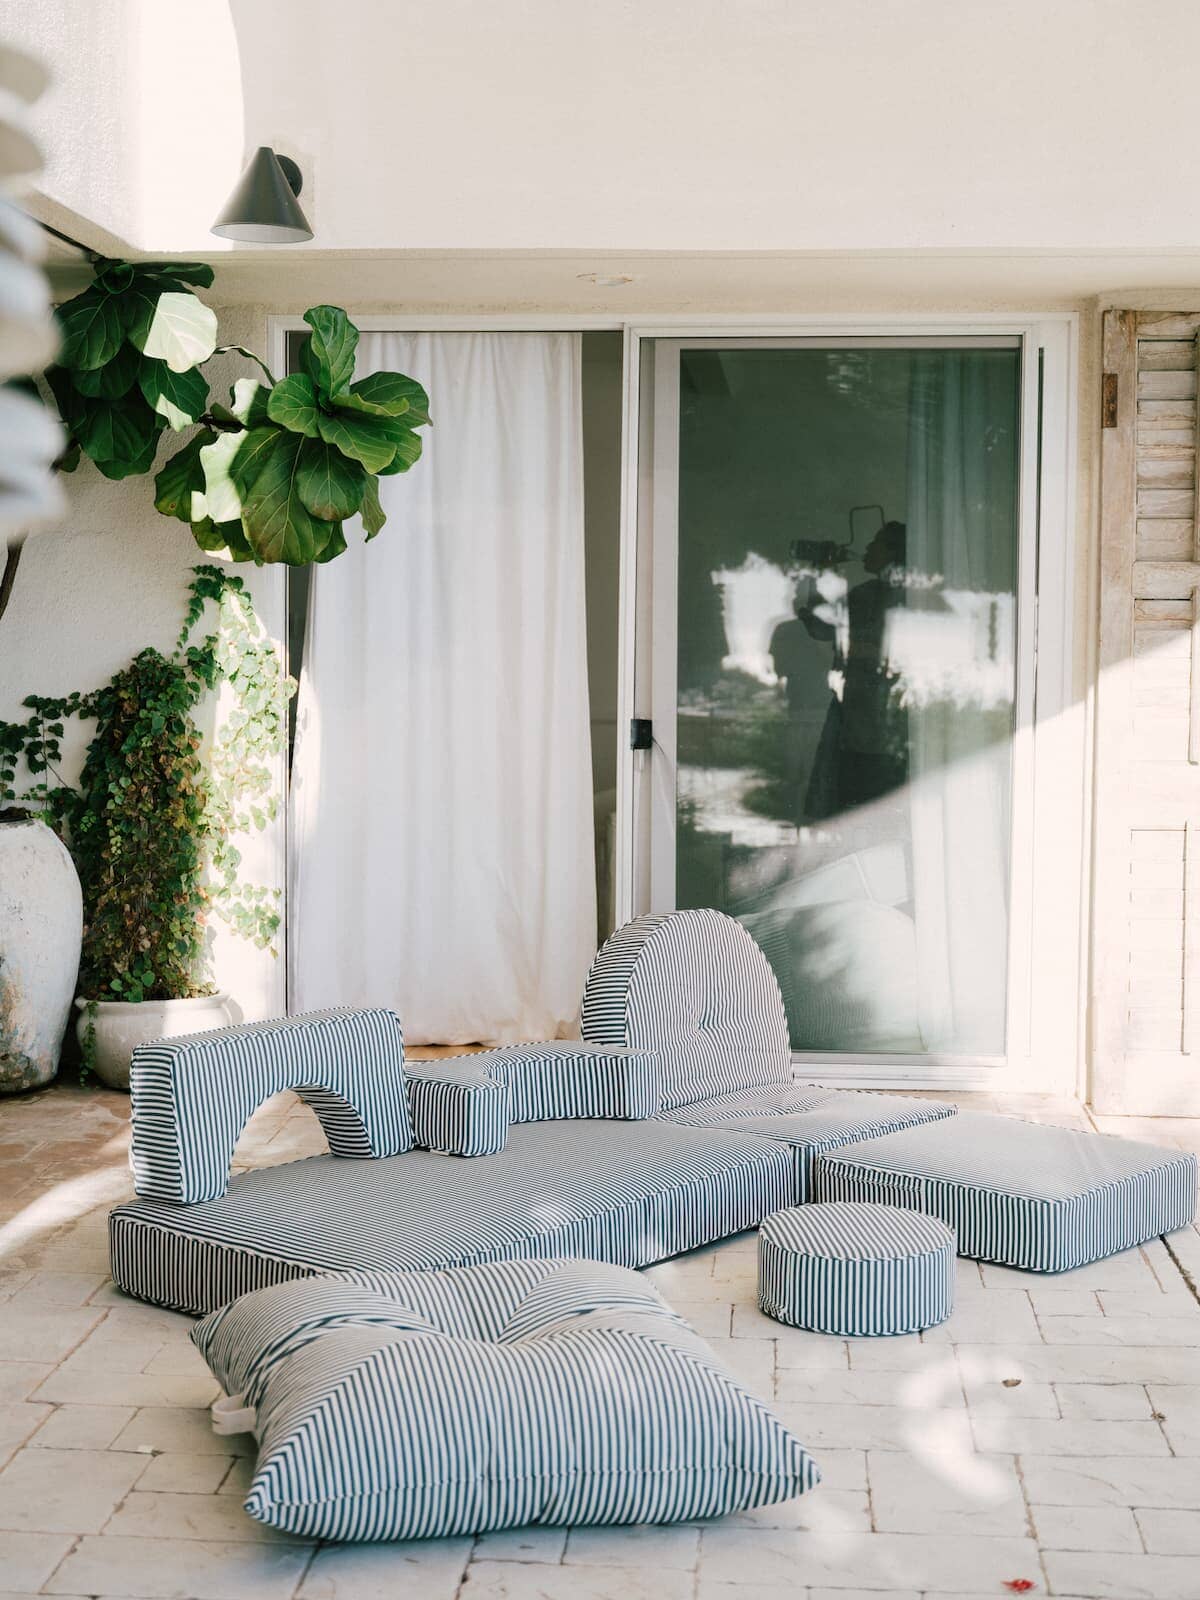 Floor pillow and modular set on a patio